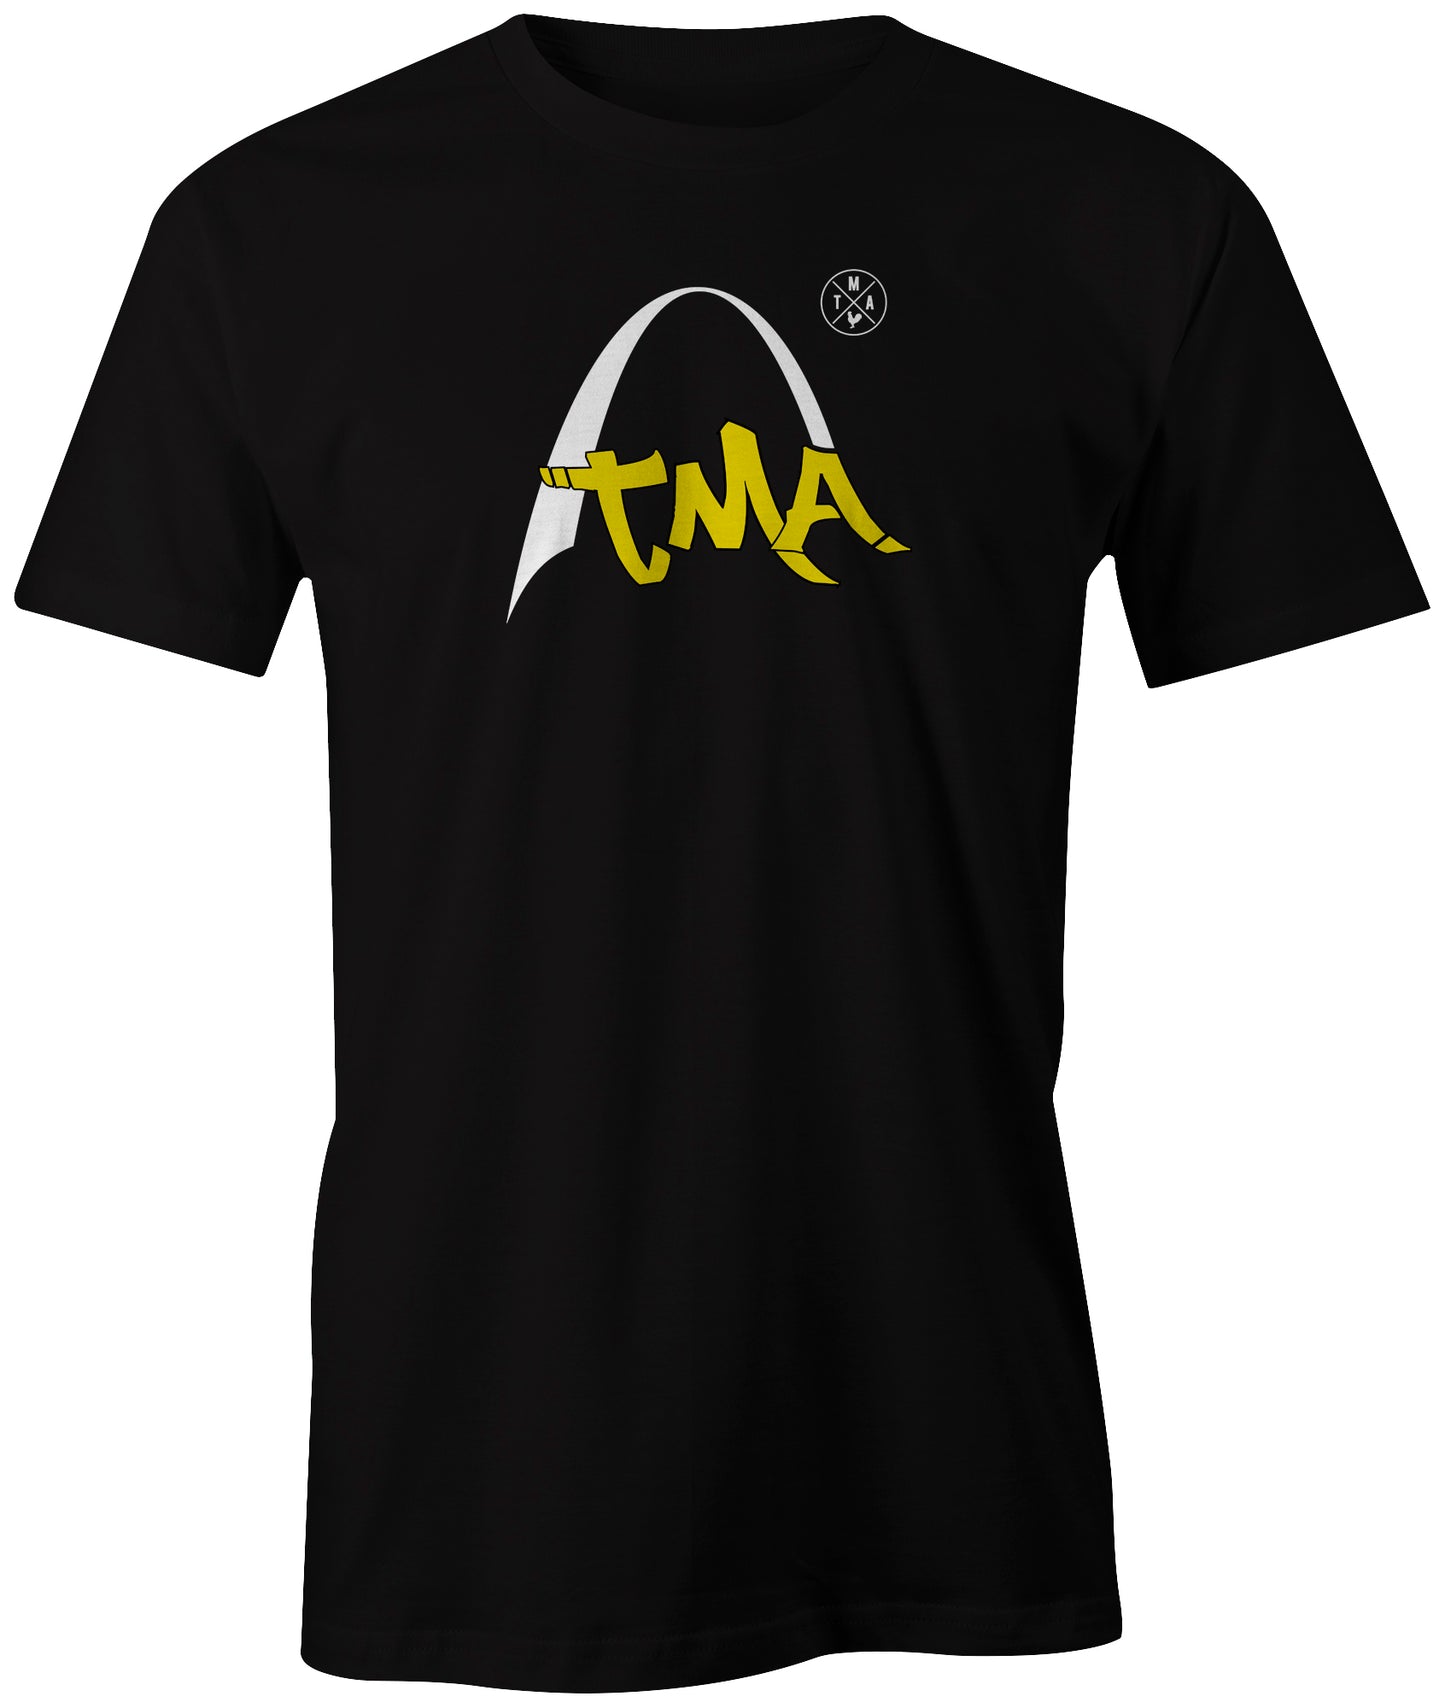 TMA graffiti st. louis saint arch logo black yellow mizzou t tee shirt t-shirt 